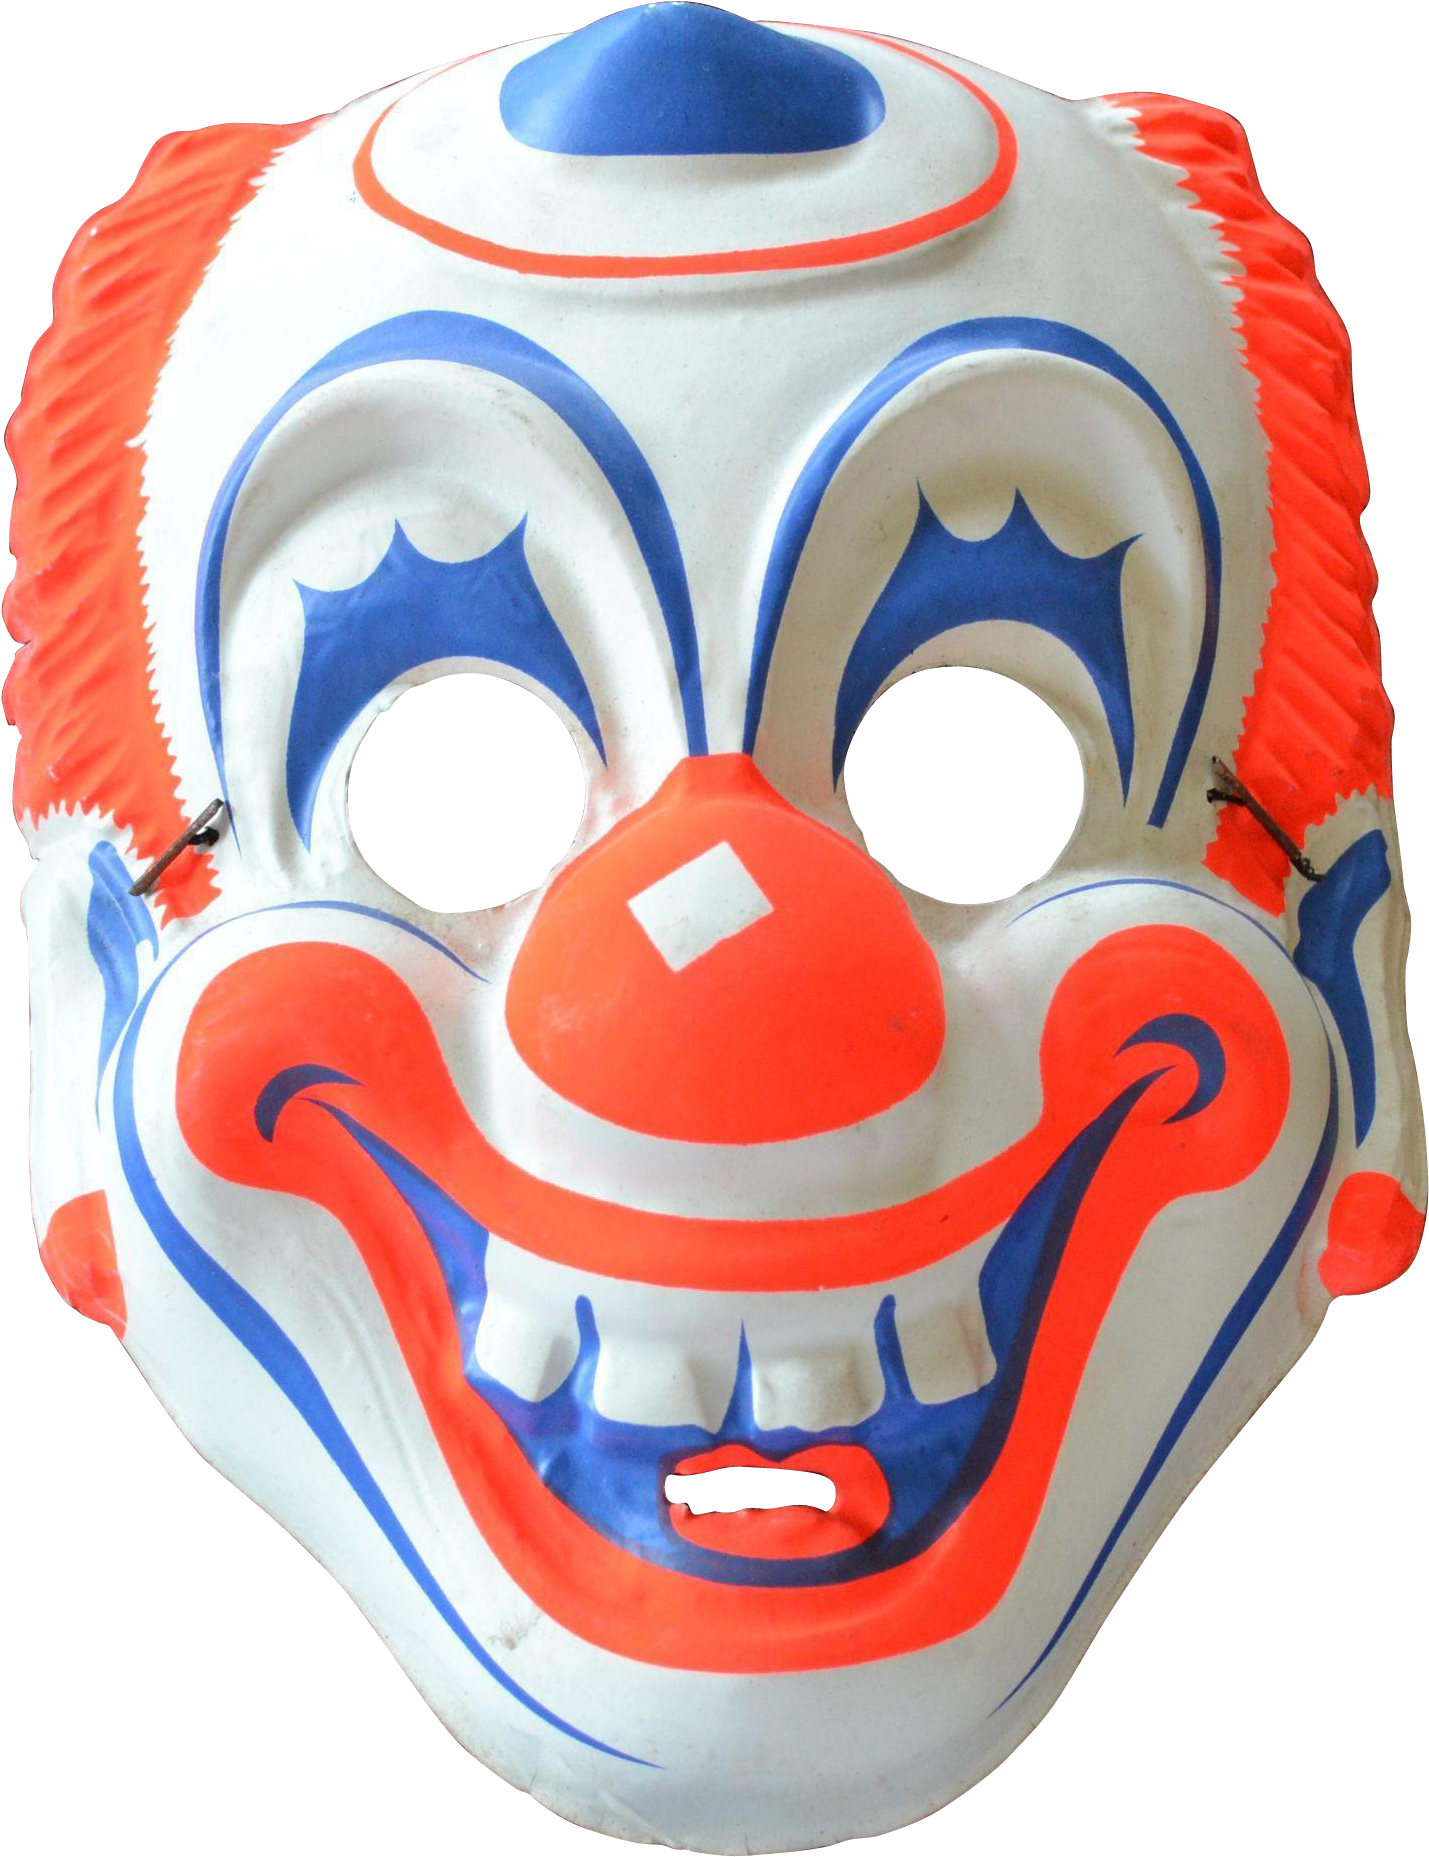 A White And Orange Clown Mask